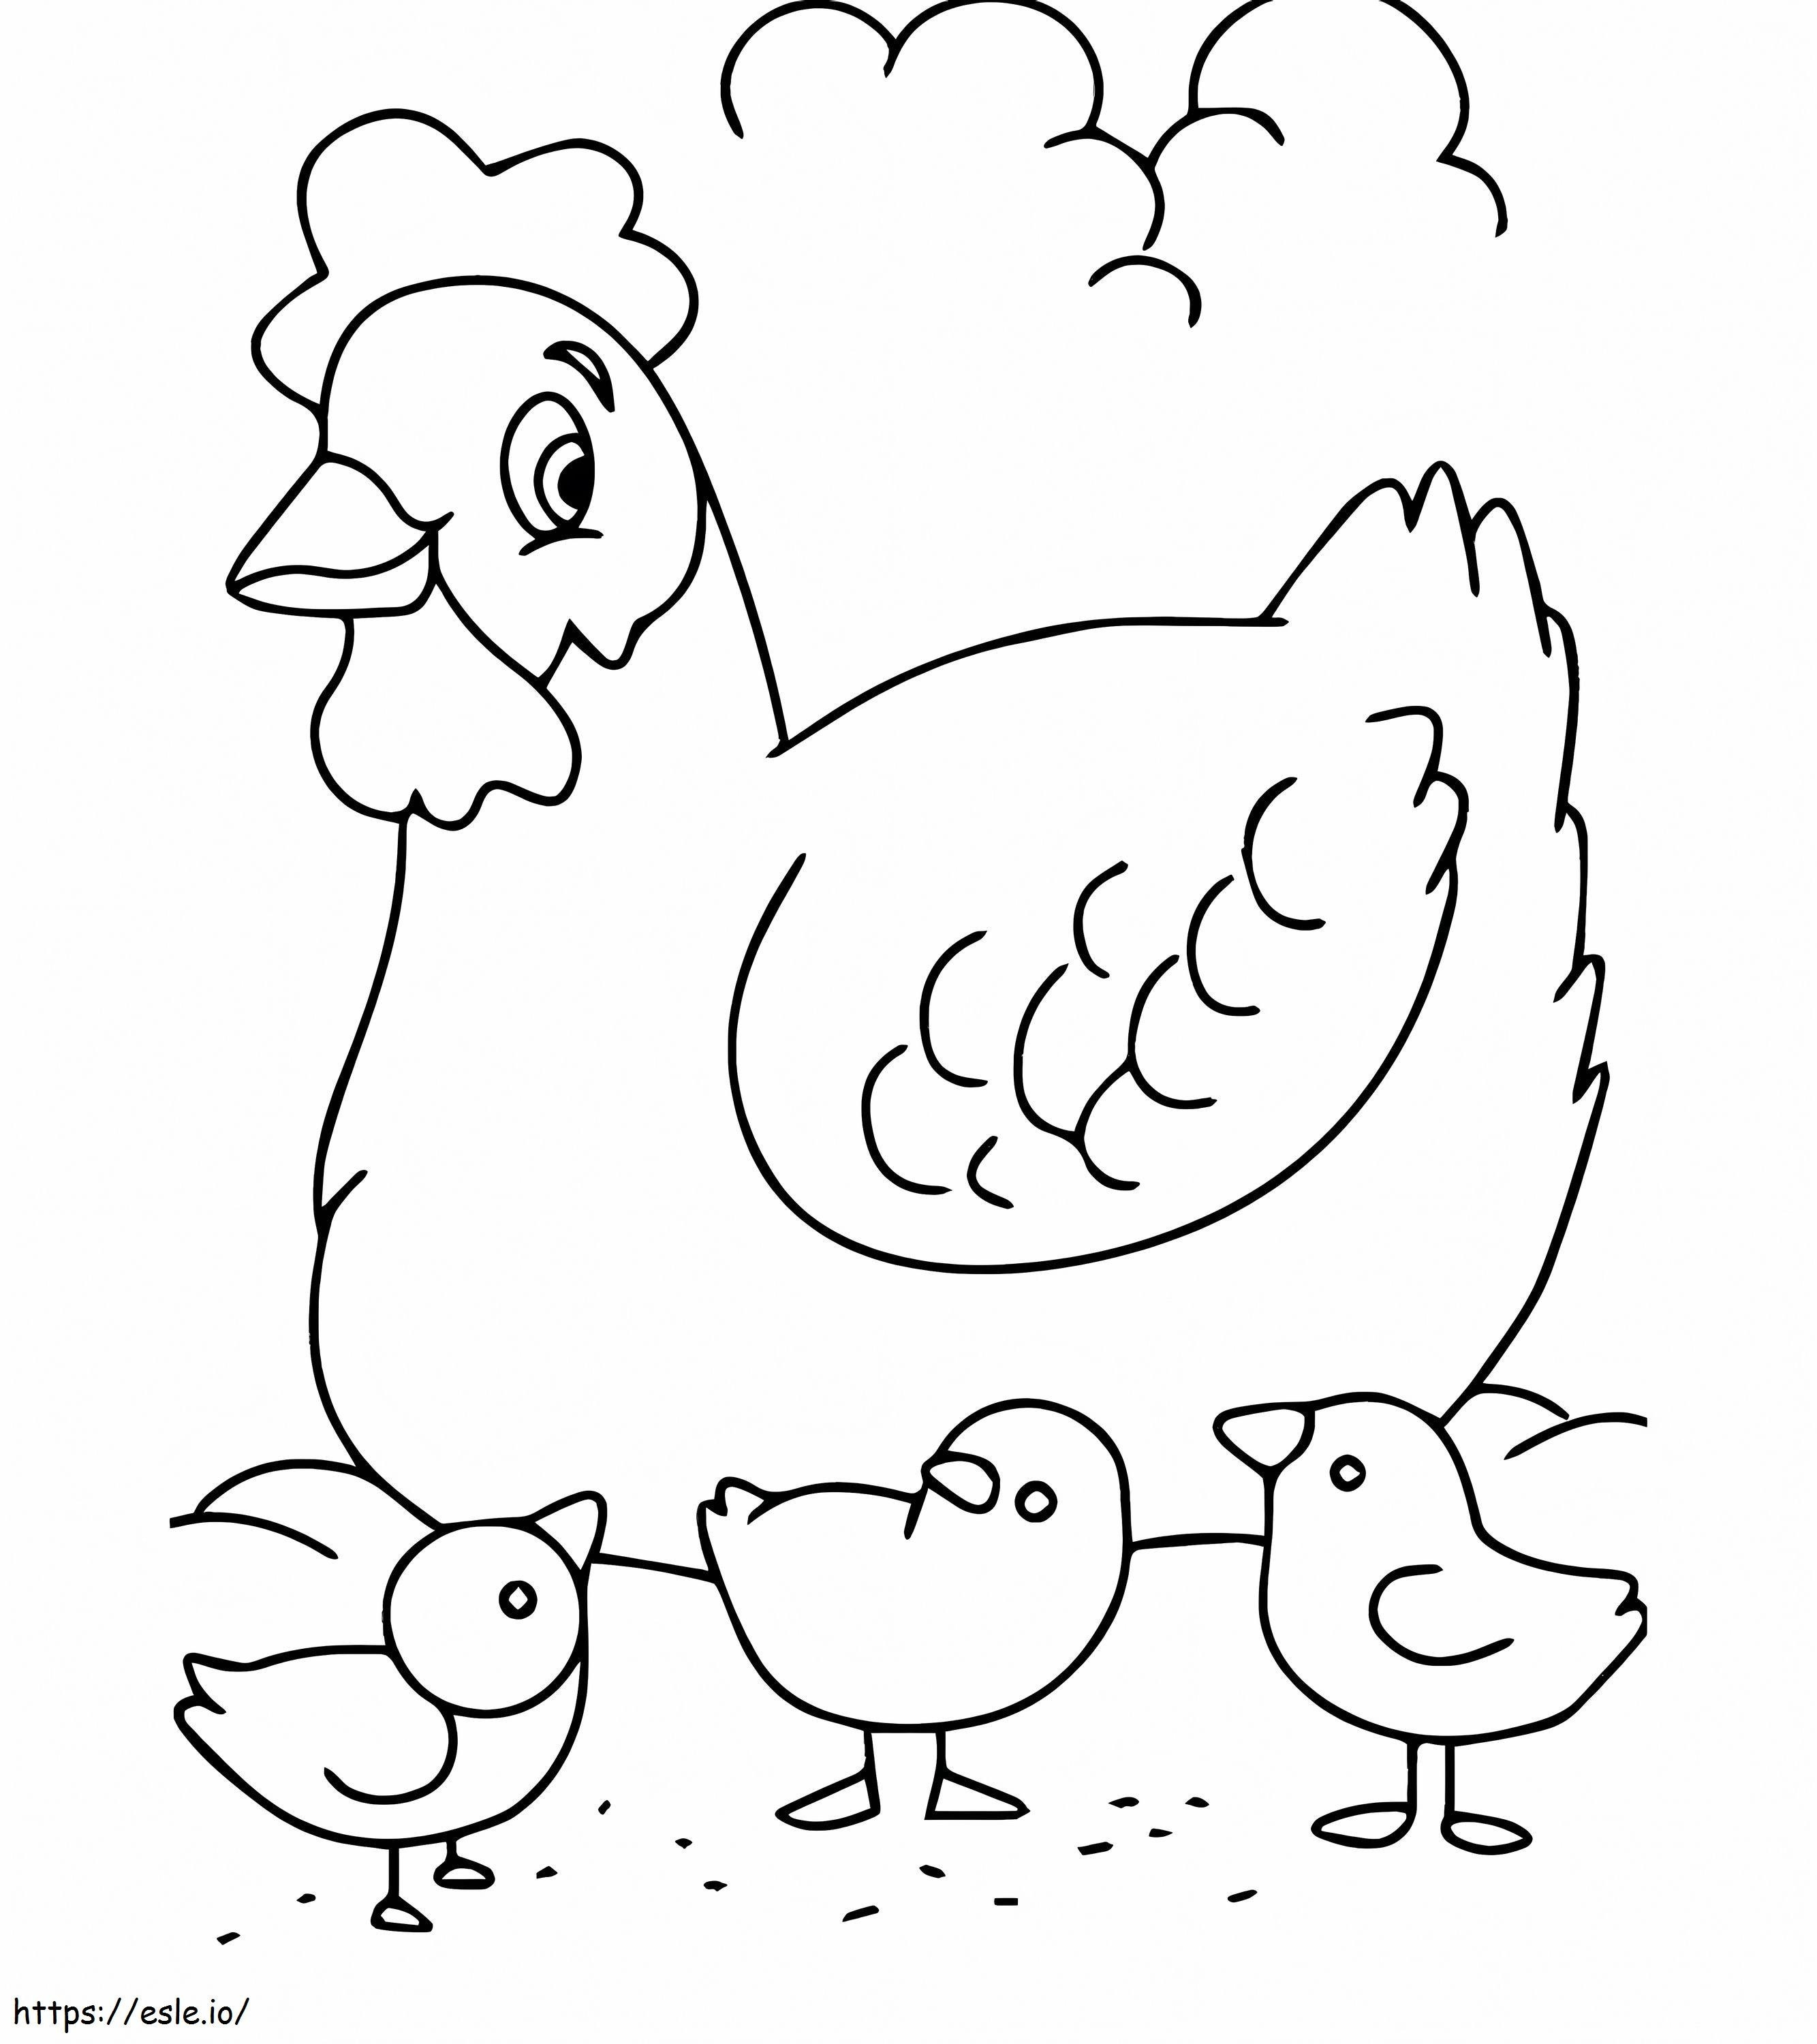 Perheen kana tilalla värityskuva